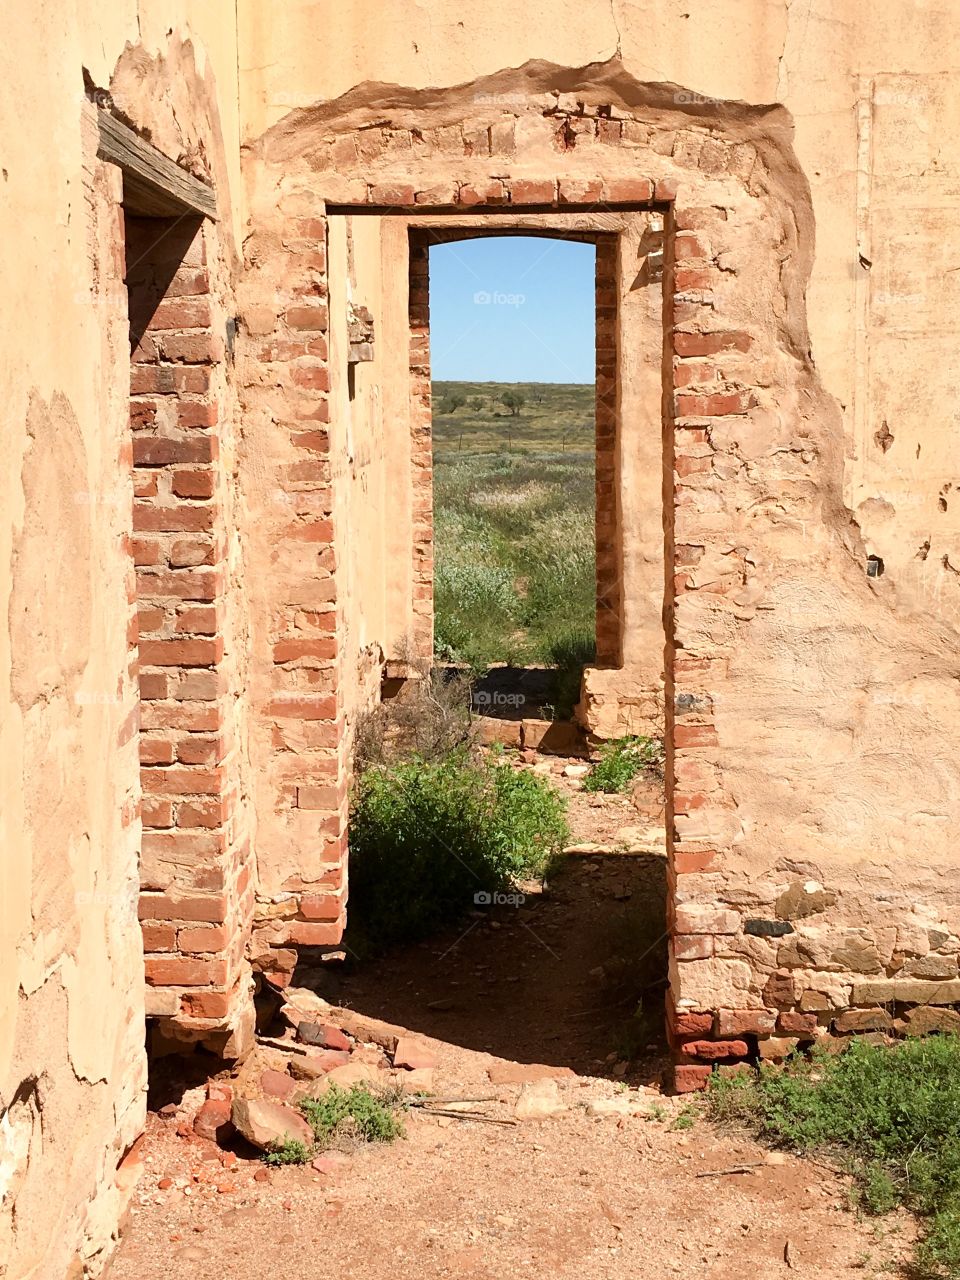 Abandoned brick and mortar house, portal doorway symbolising decisions and destiny